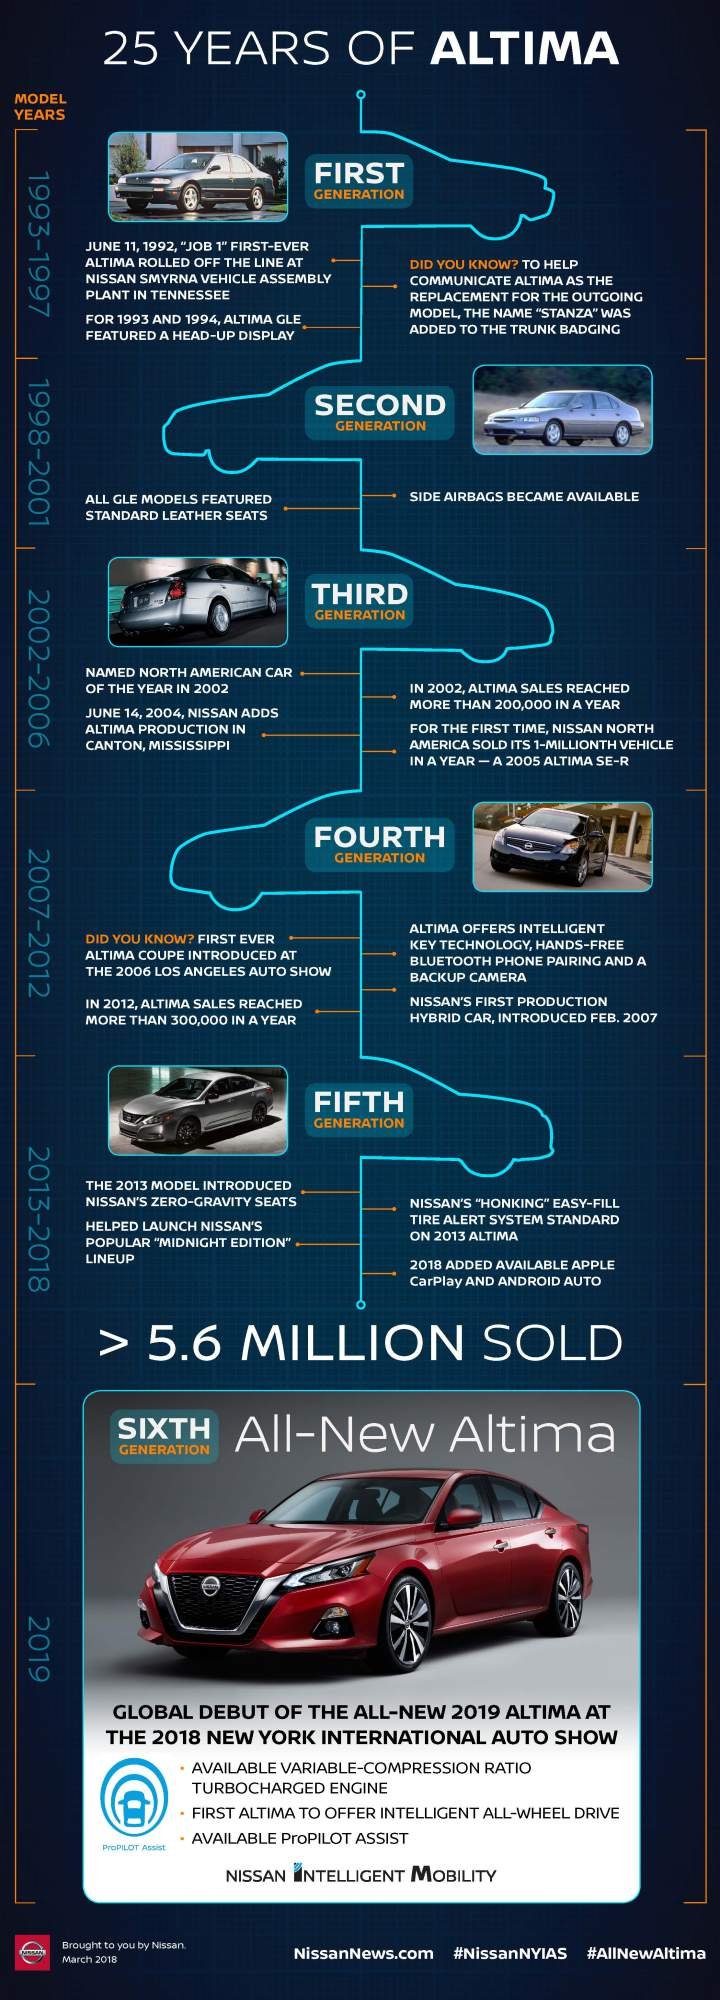 Nissan-Altima-heritage-infographic